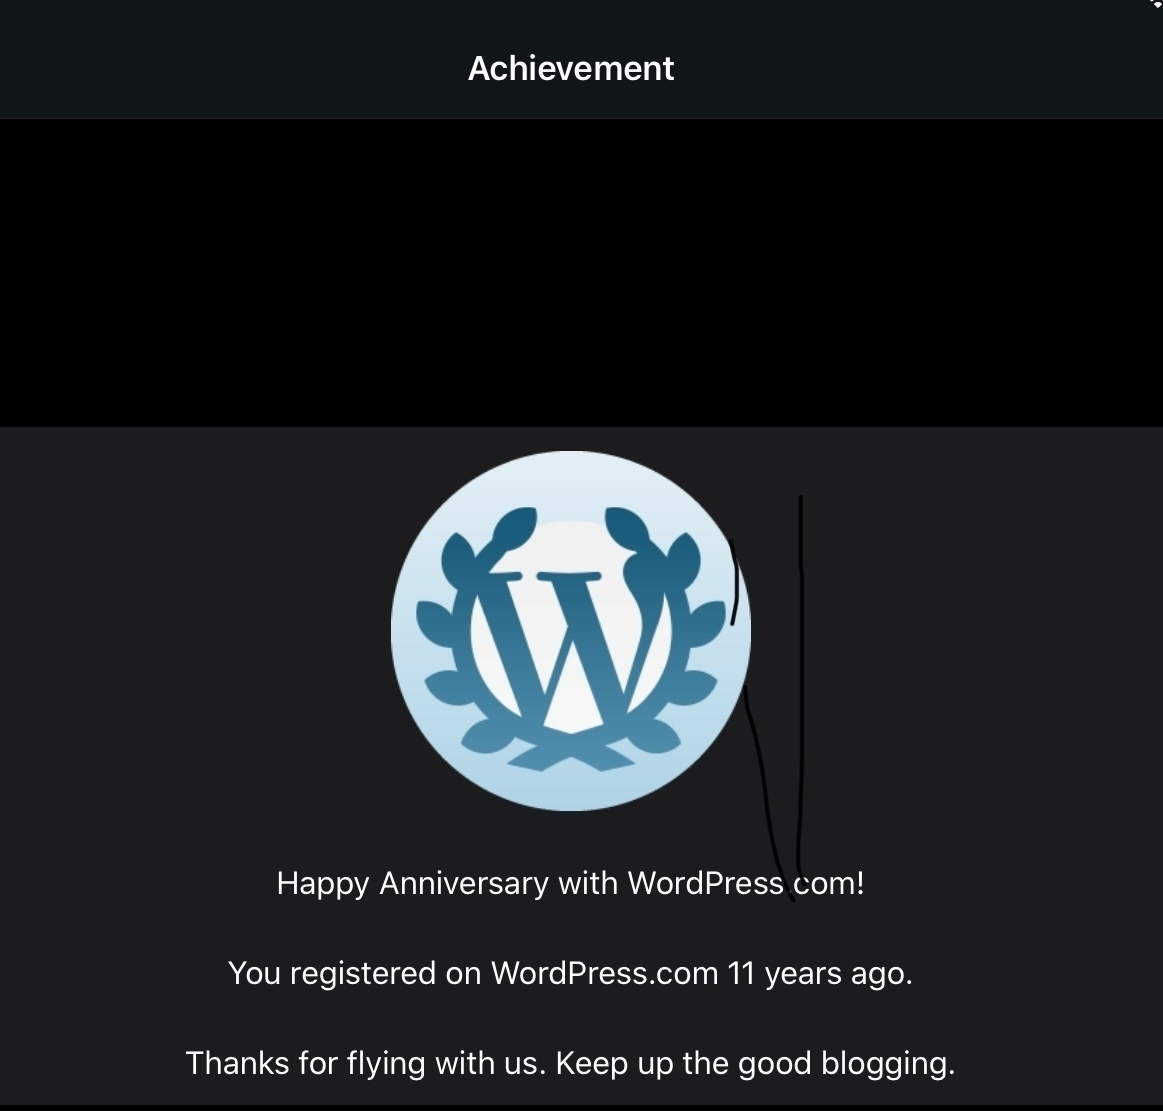 You registered on WordPress.com 11 years ago